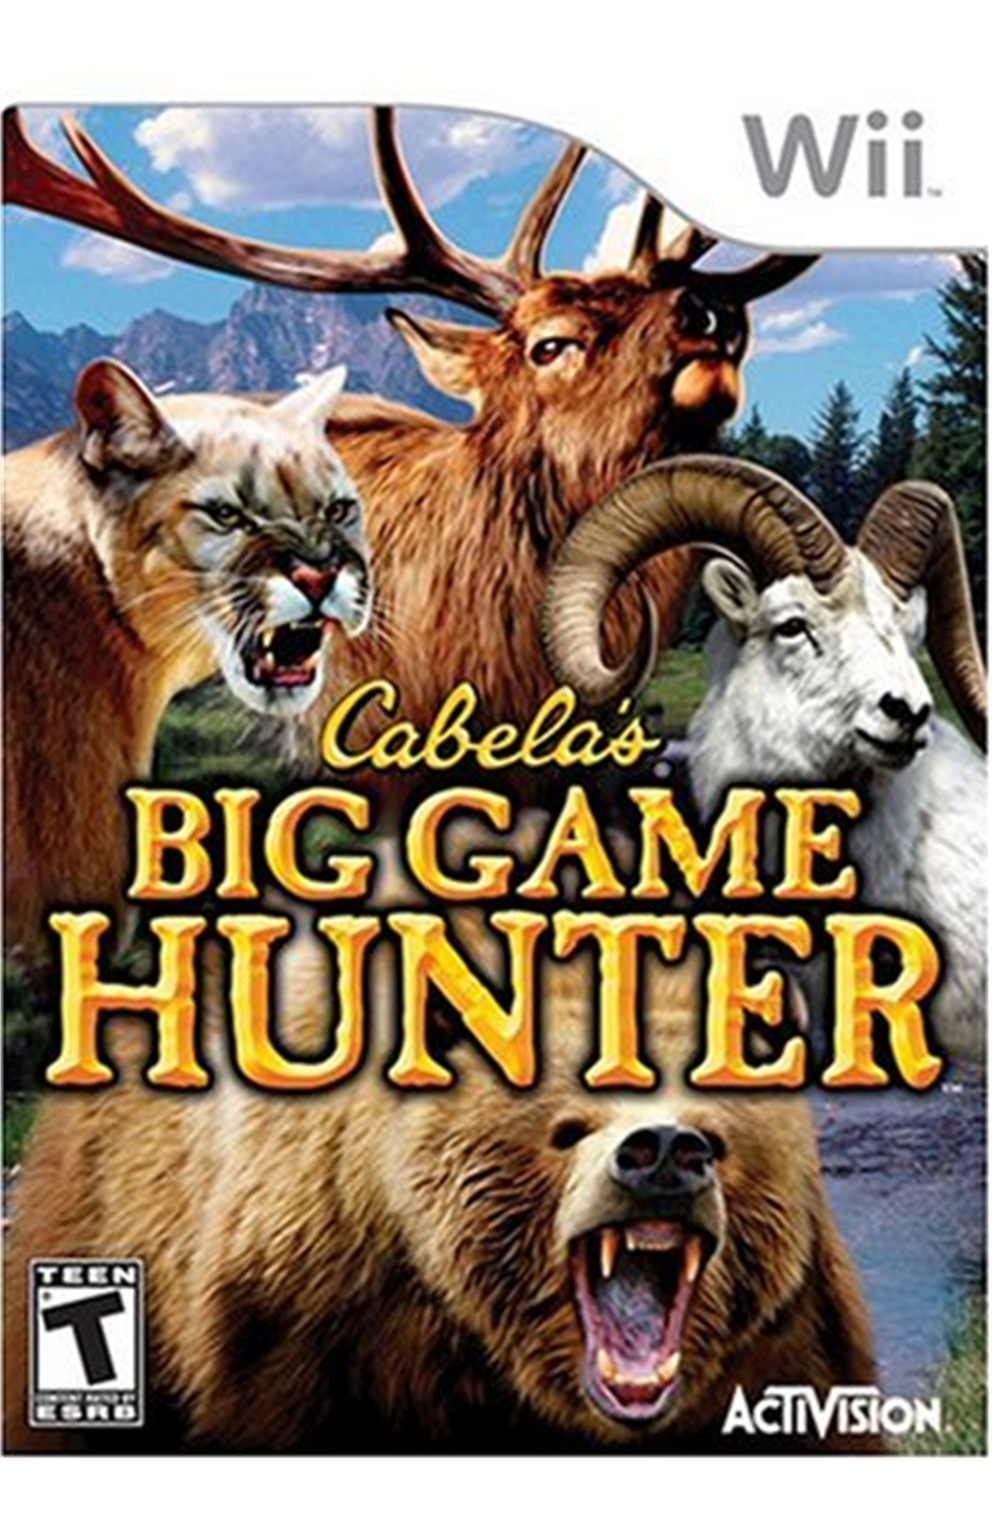 Nintendo Wii Cabela's Big Game Hunter